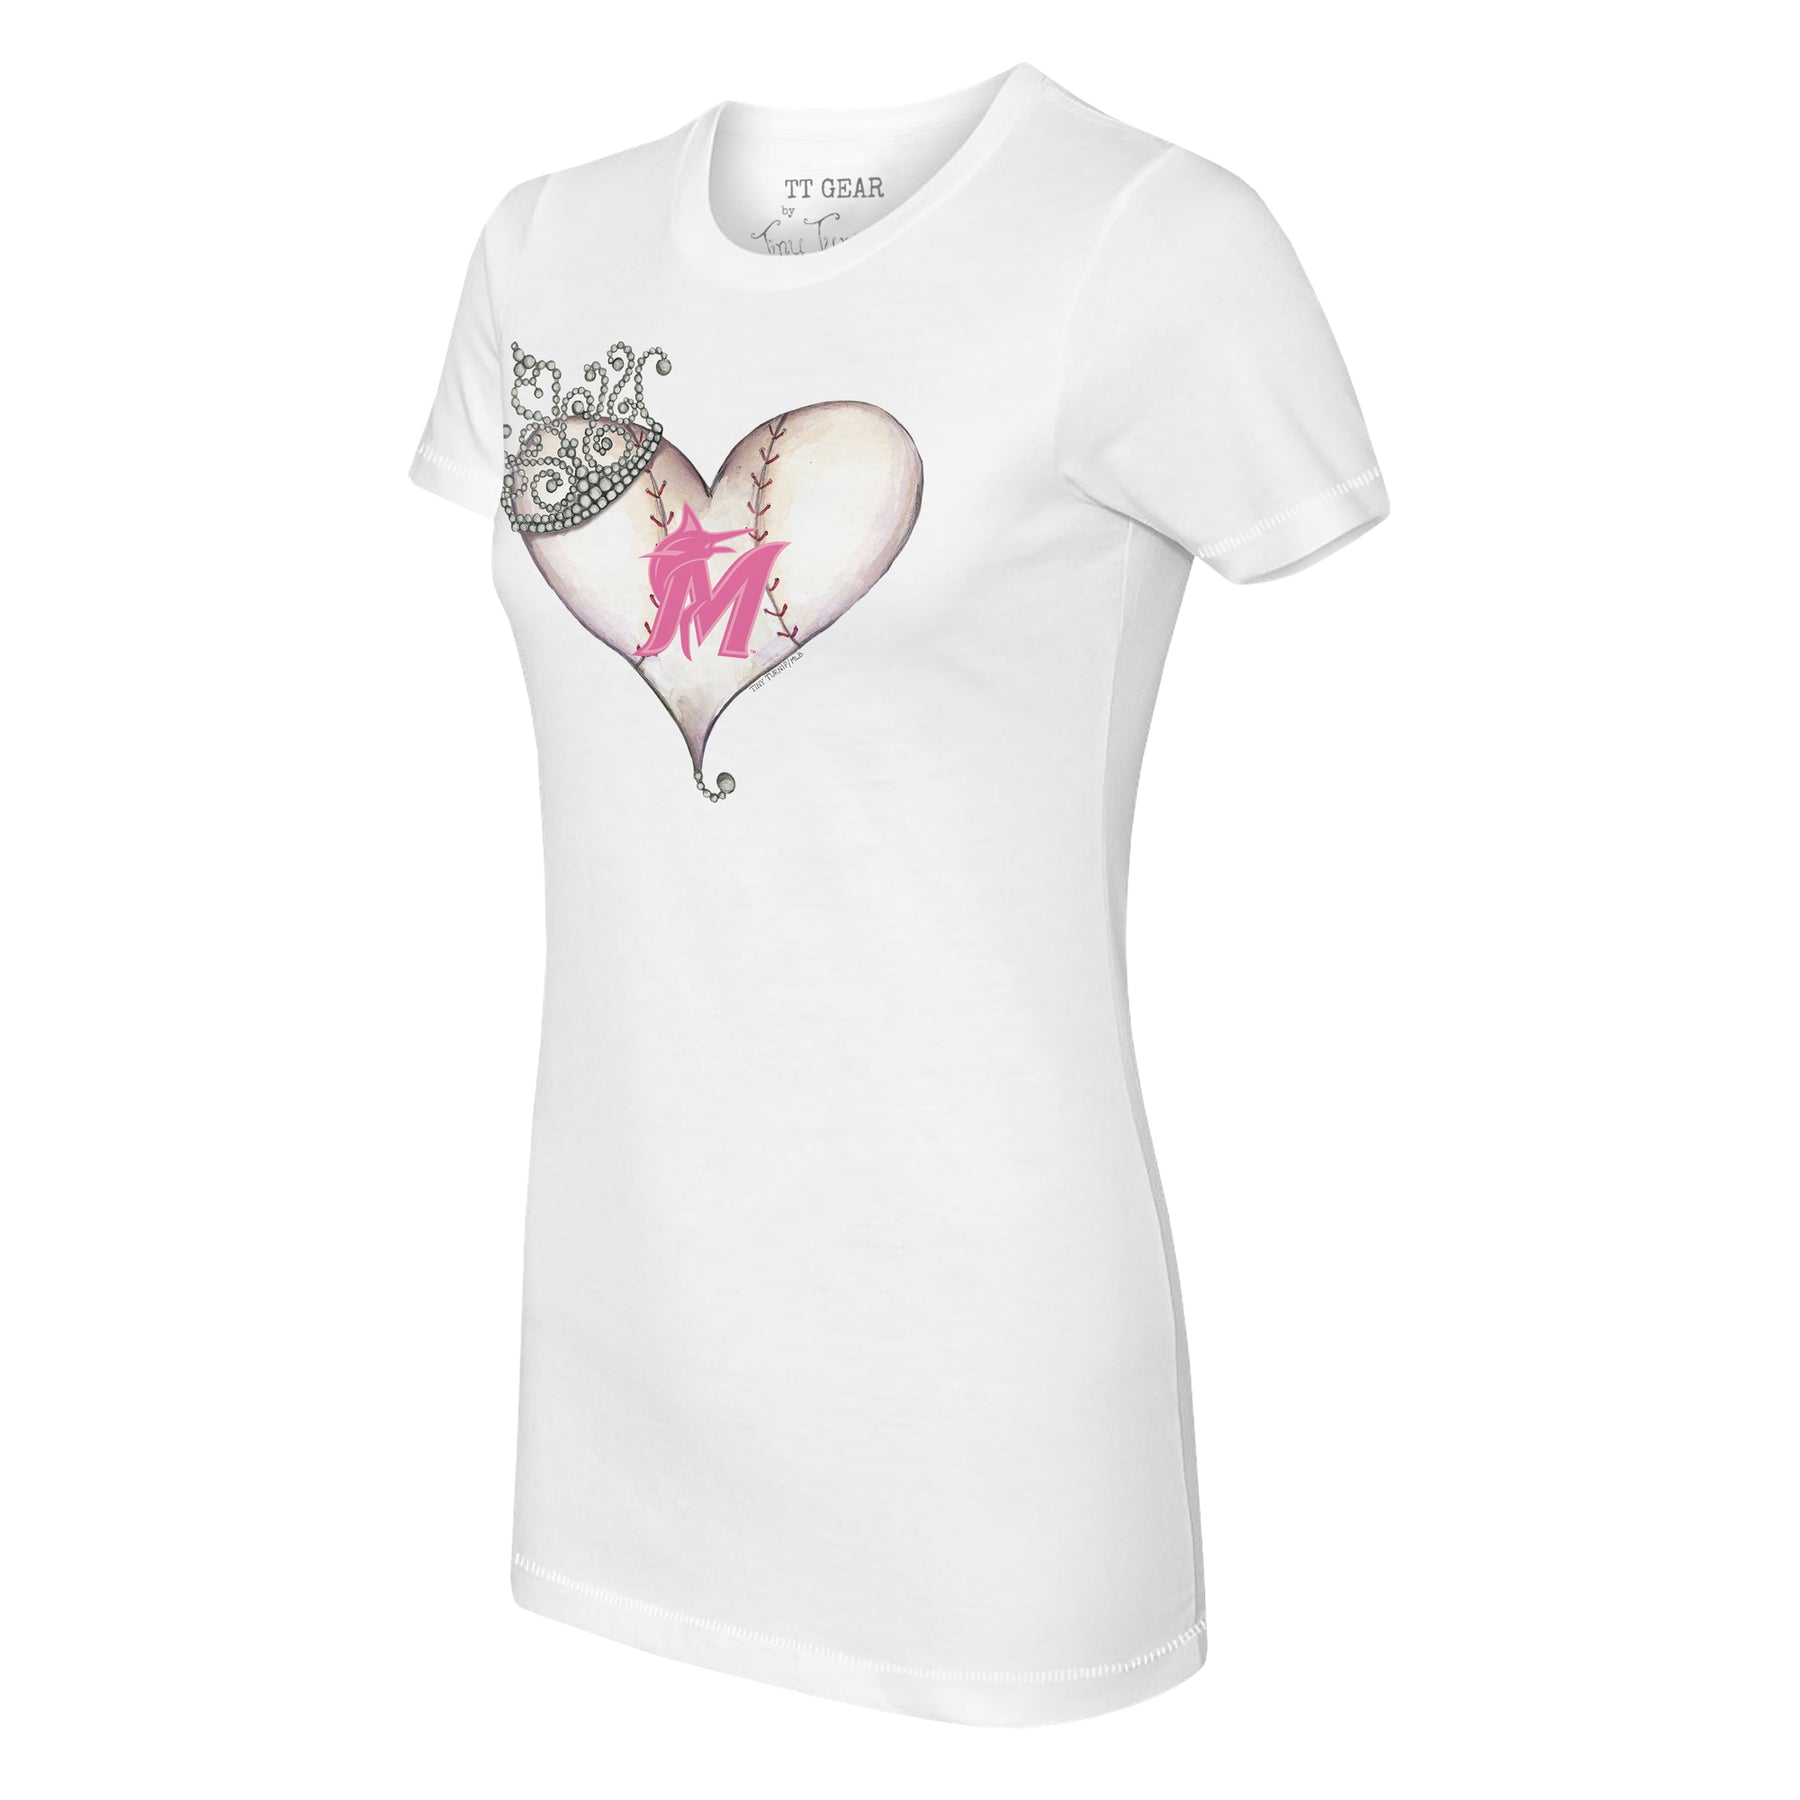 Miami Marlins Tiara Heart Tee Shirt Youth Large (10-12) / White